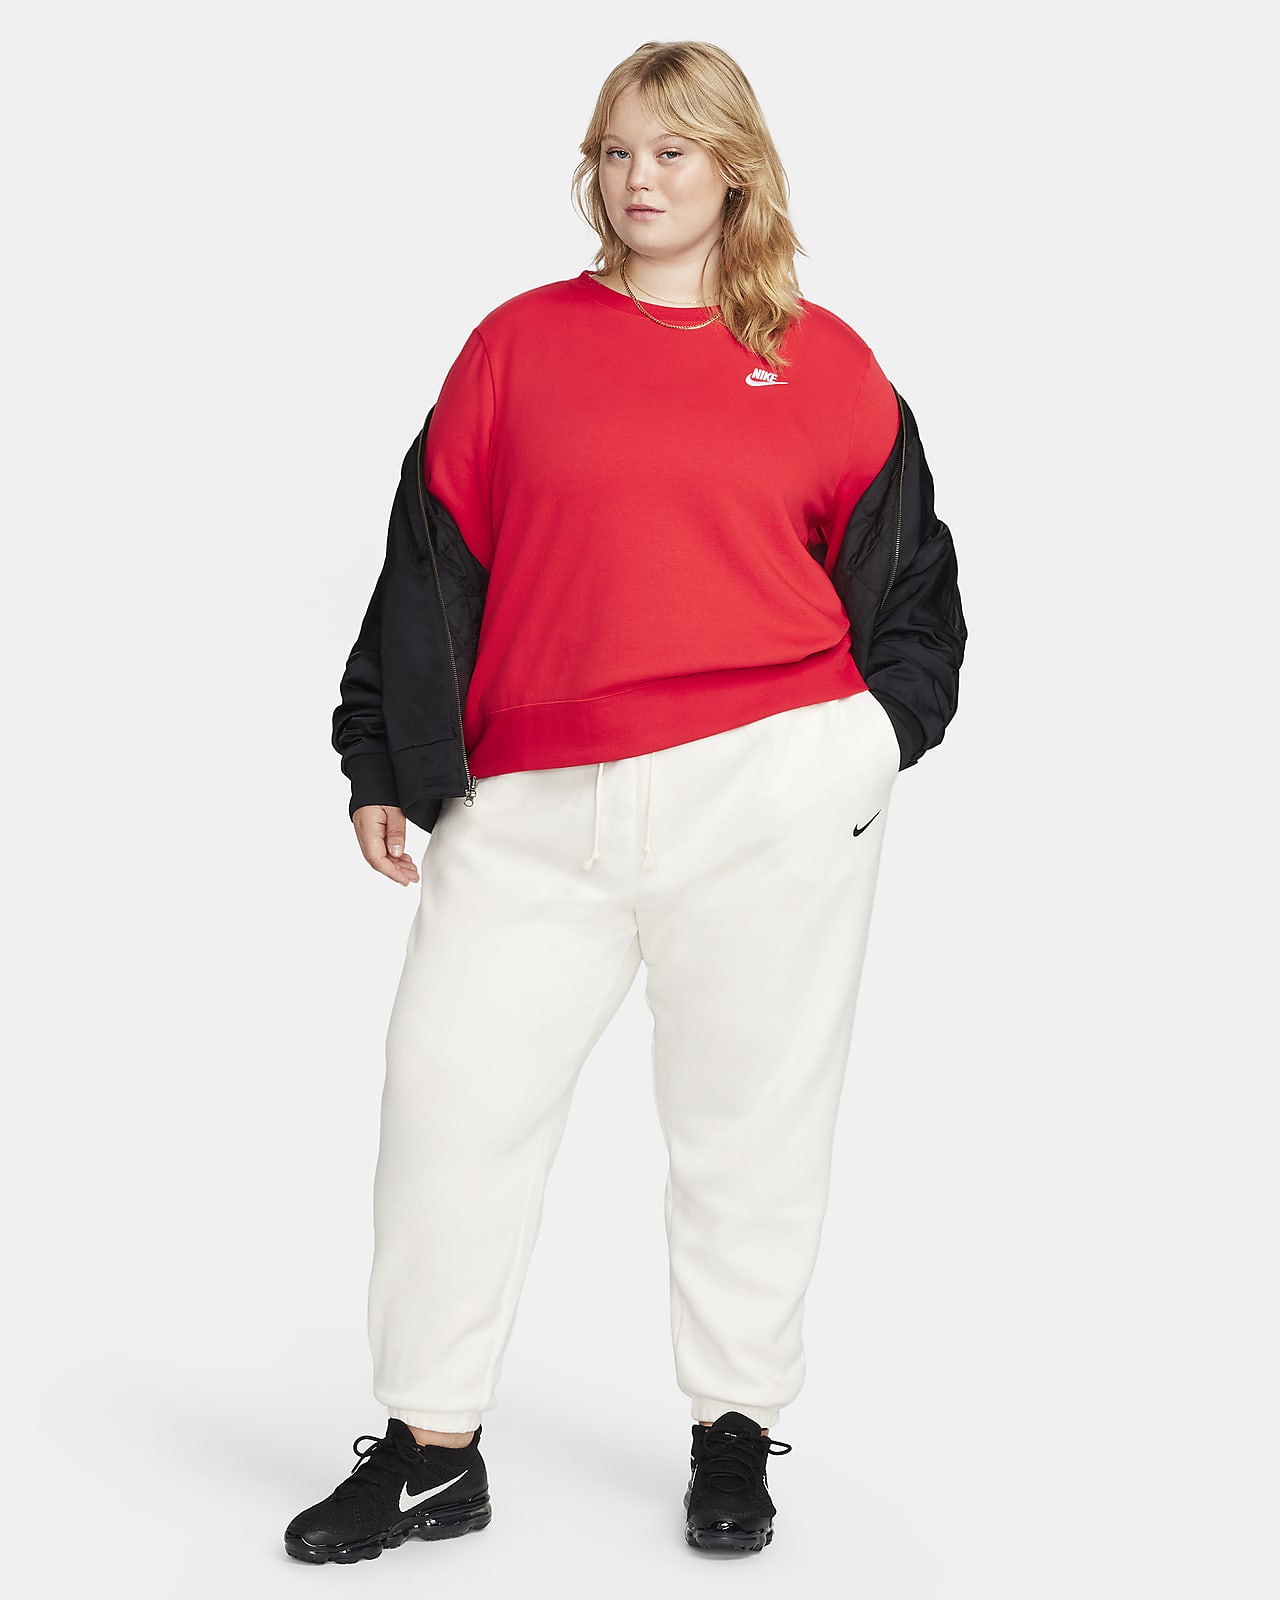 Sportswear Club Women's Sweatshirt (Plus Nike .com